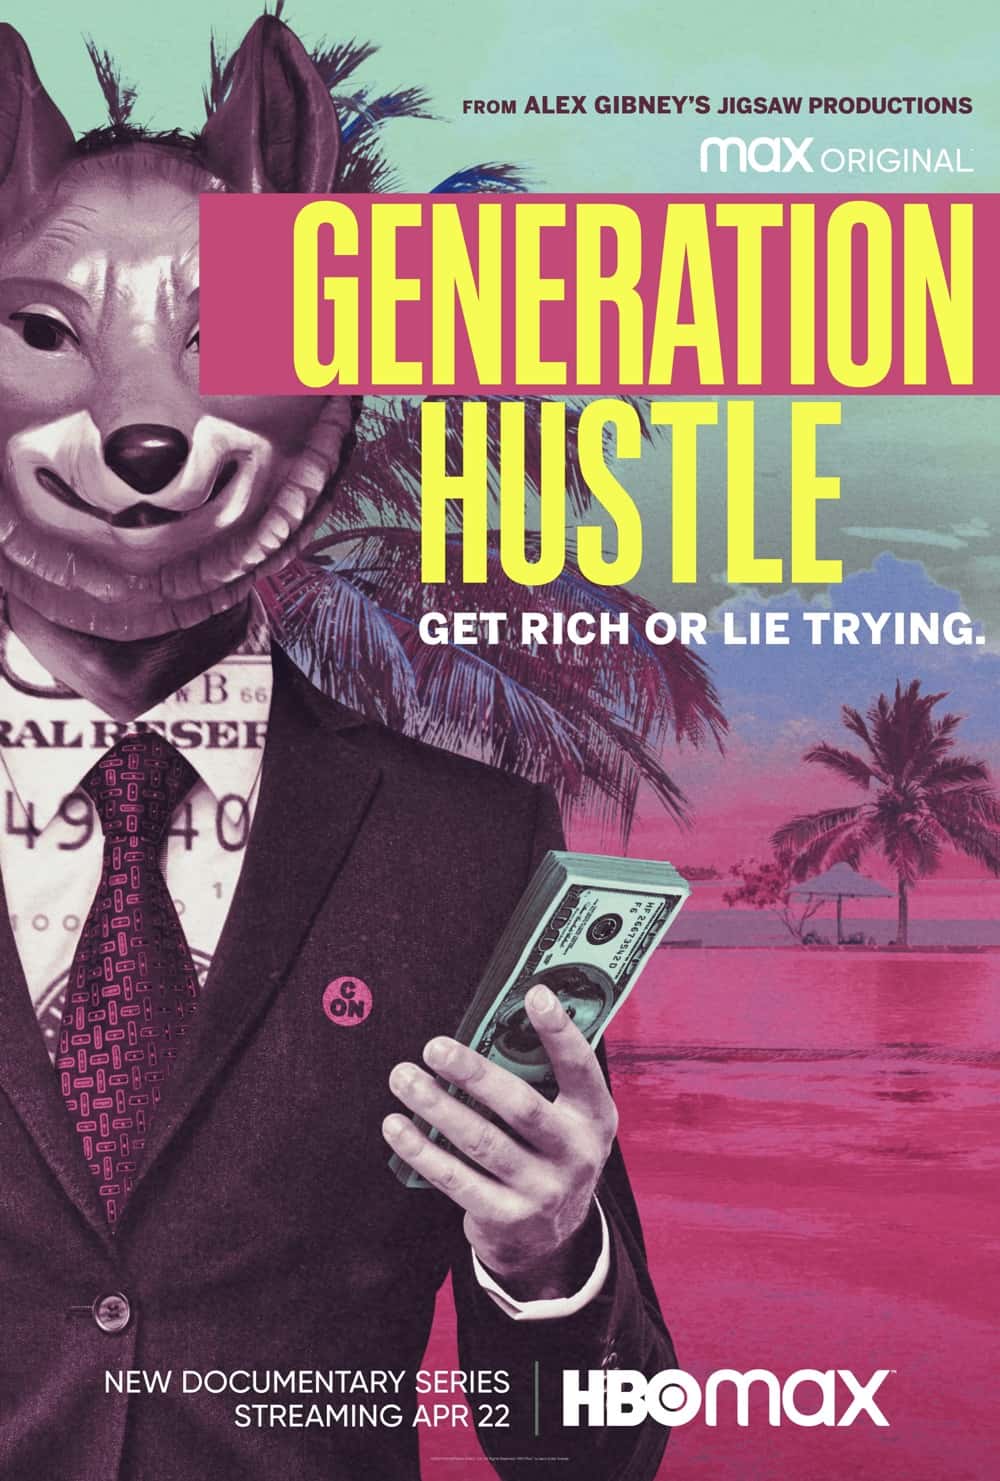 [TV] Generation Hustle (HBO Max)